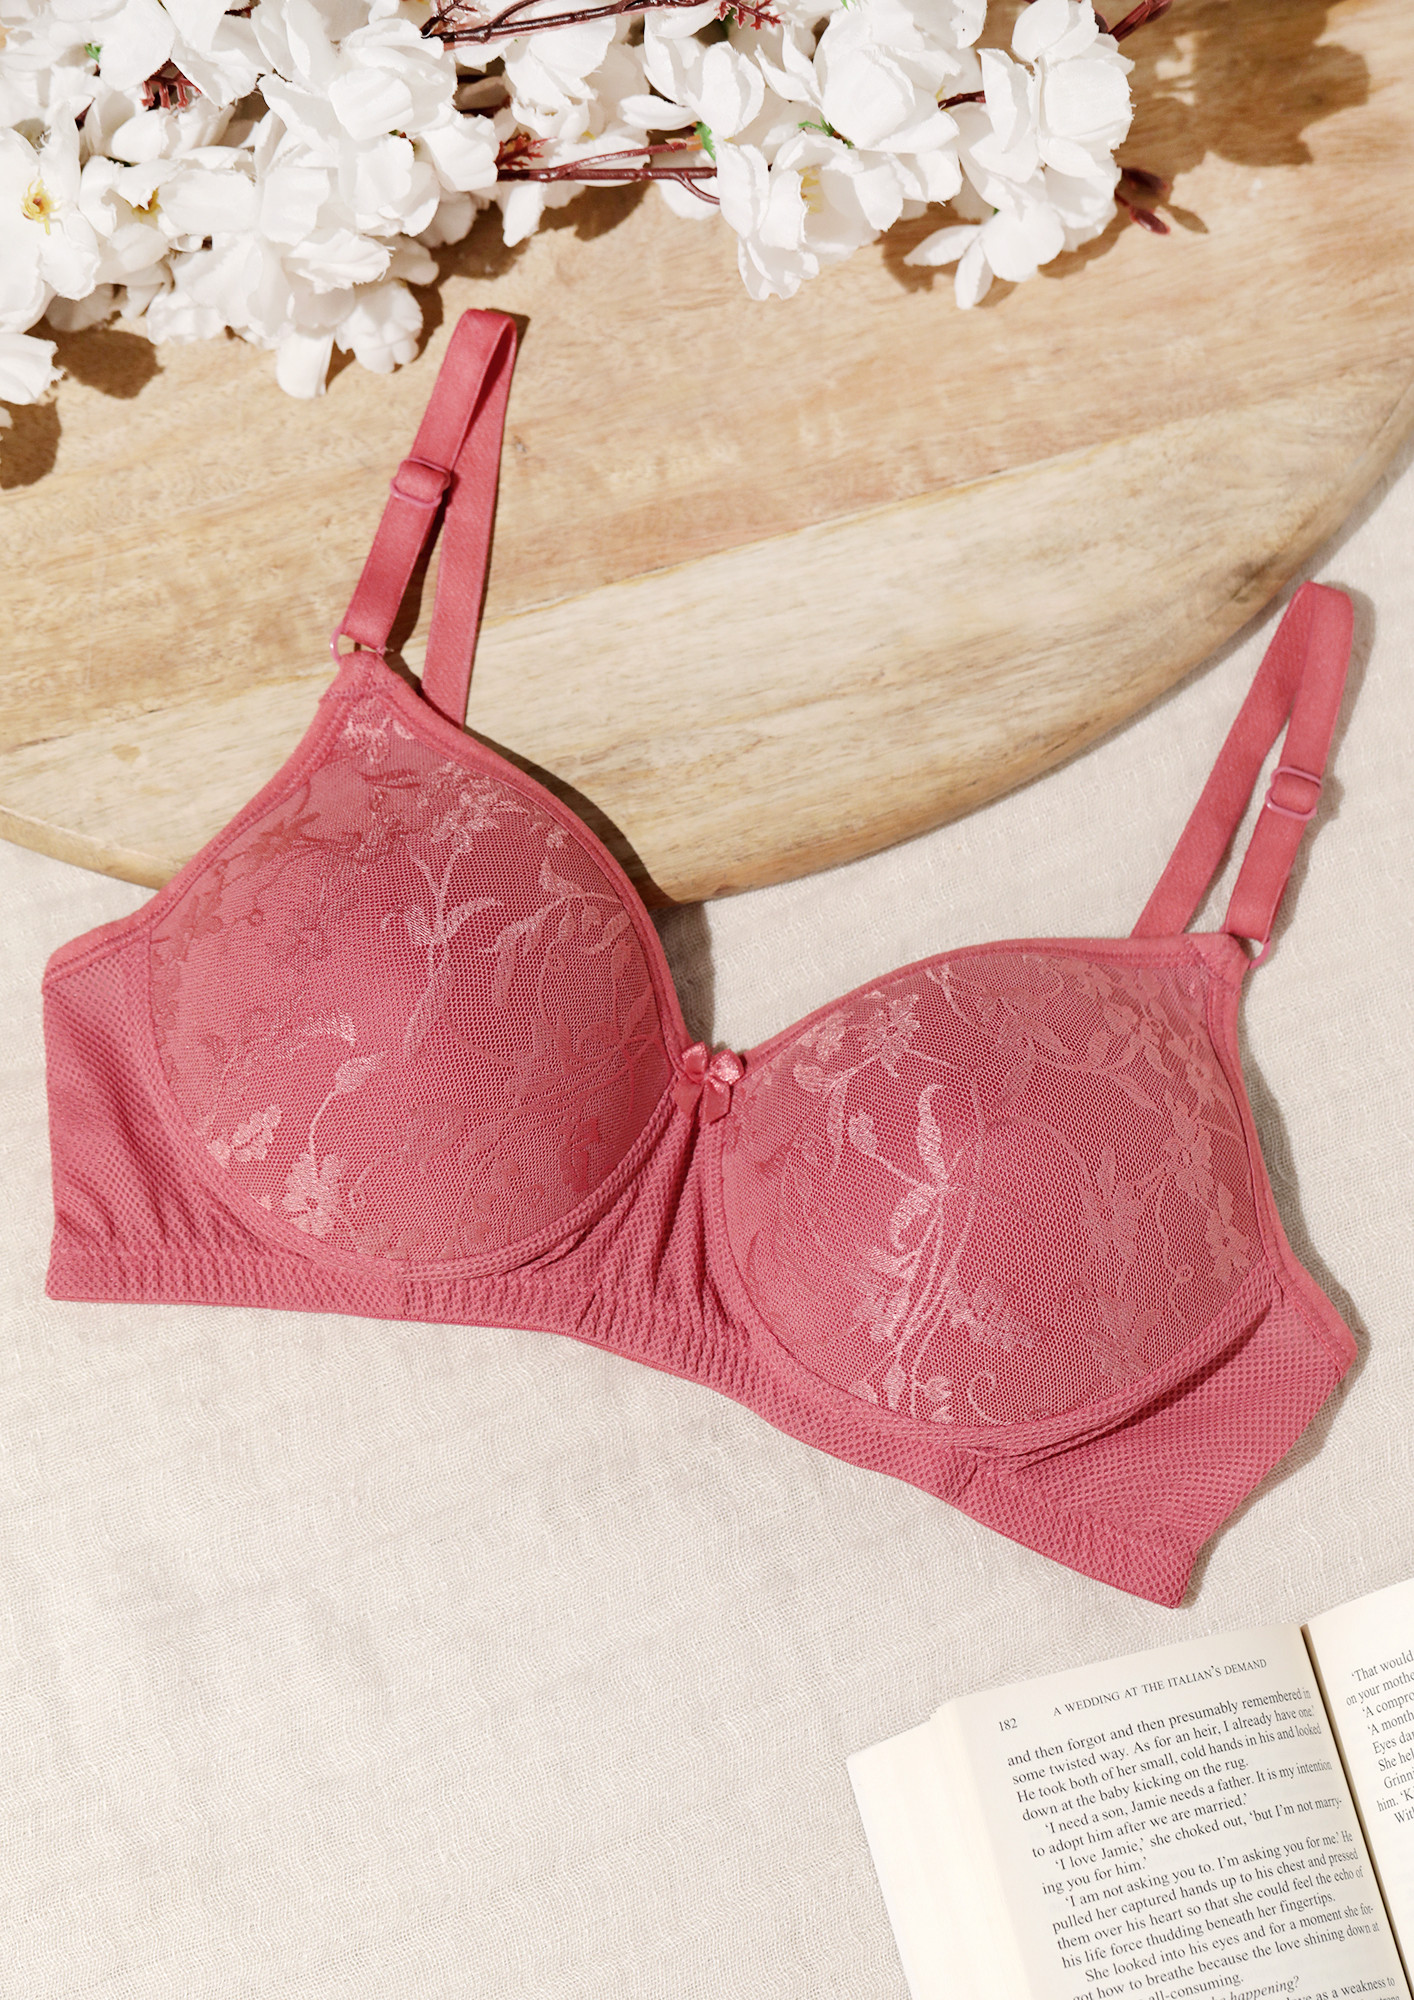 Buy Pink Bras for Women by AMOUR SECRET Online